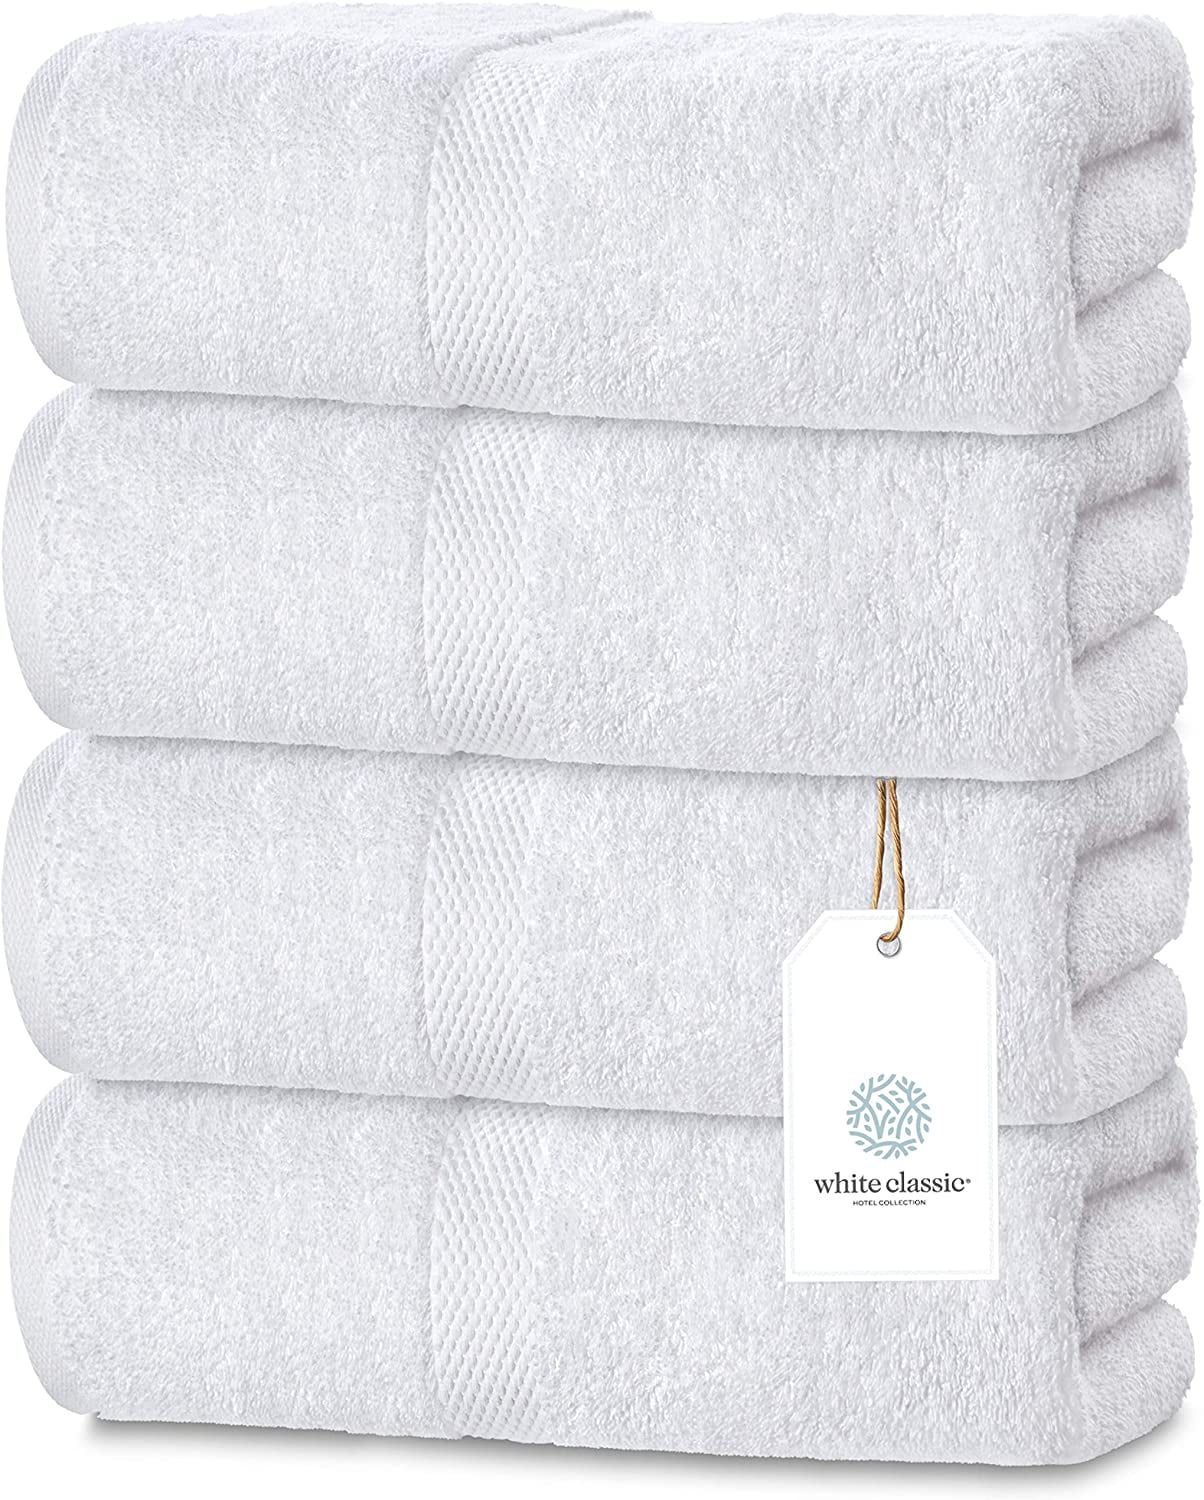 2 pack premium plush absorbent white cotton hotel bath towels large 27x54 17# 